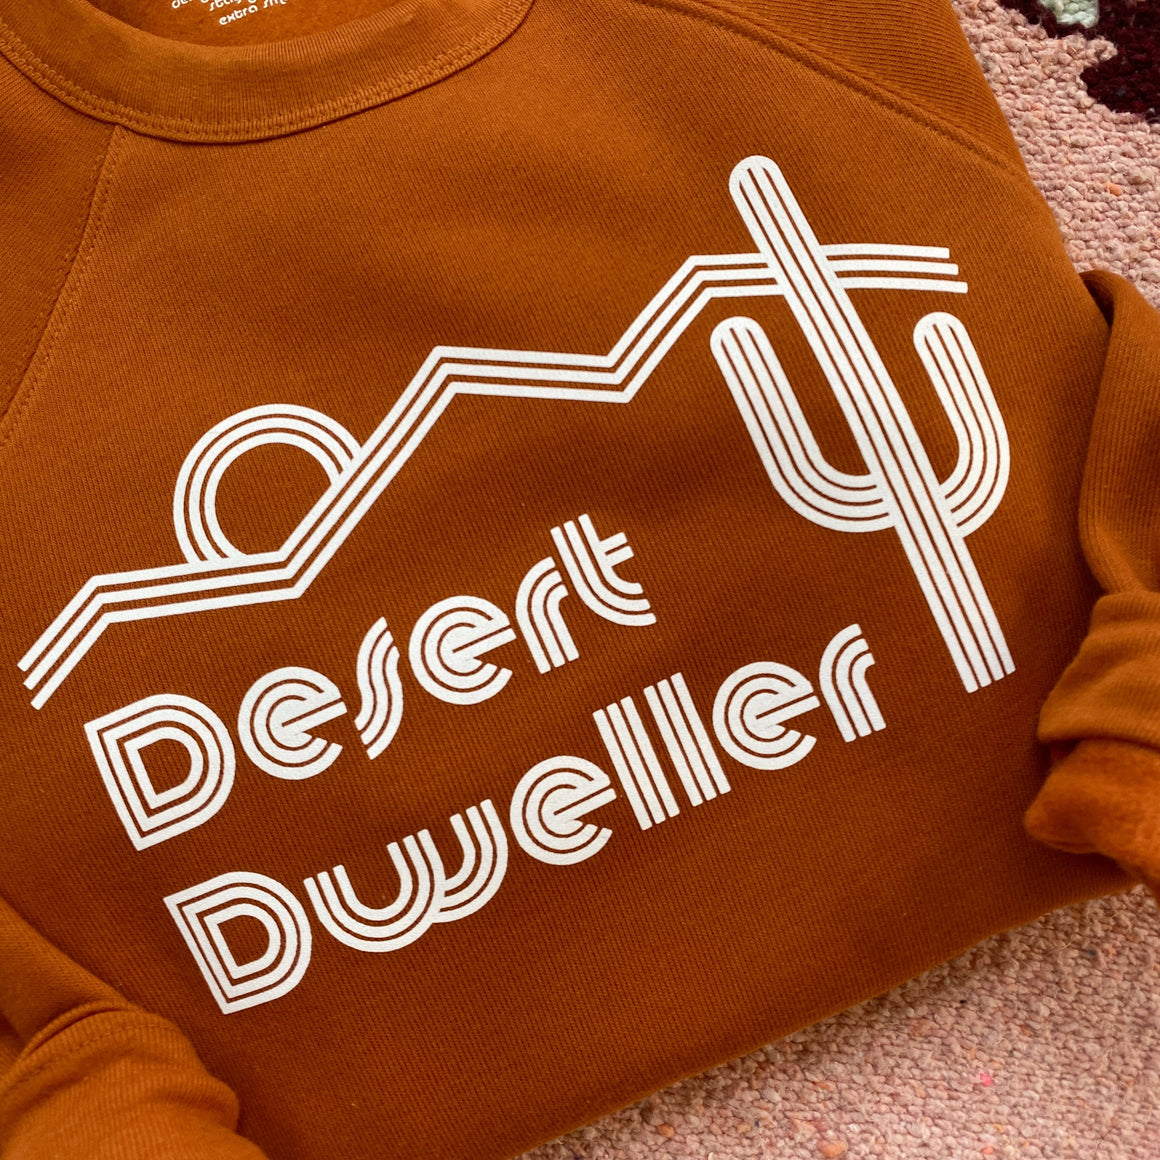 Desert Dweller Crewneck Sweatshirt